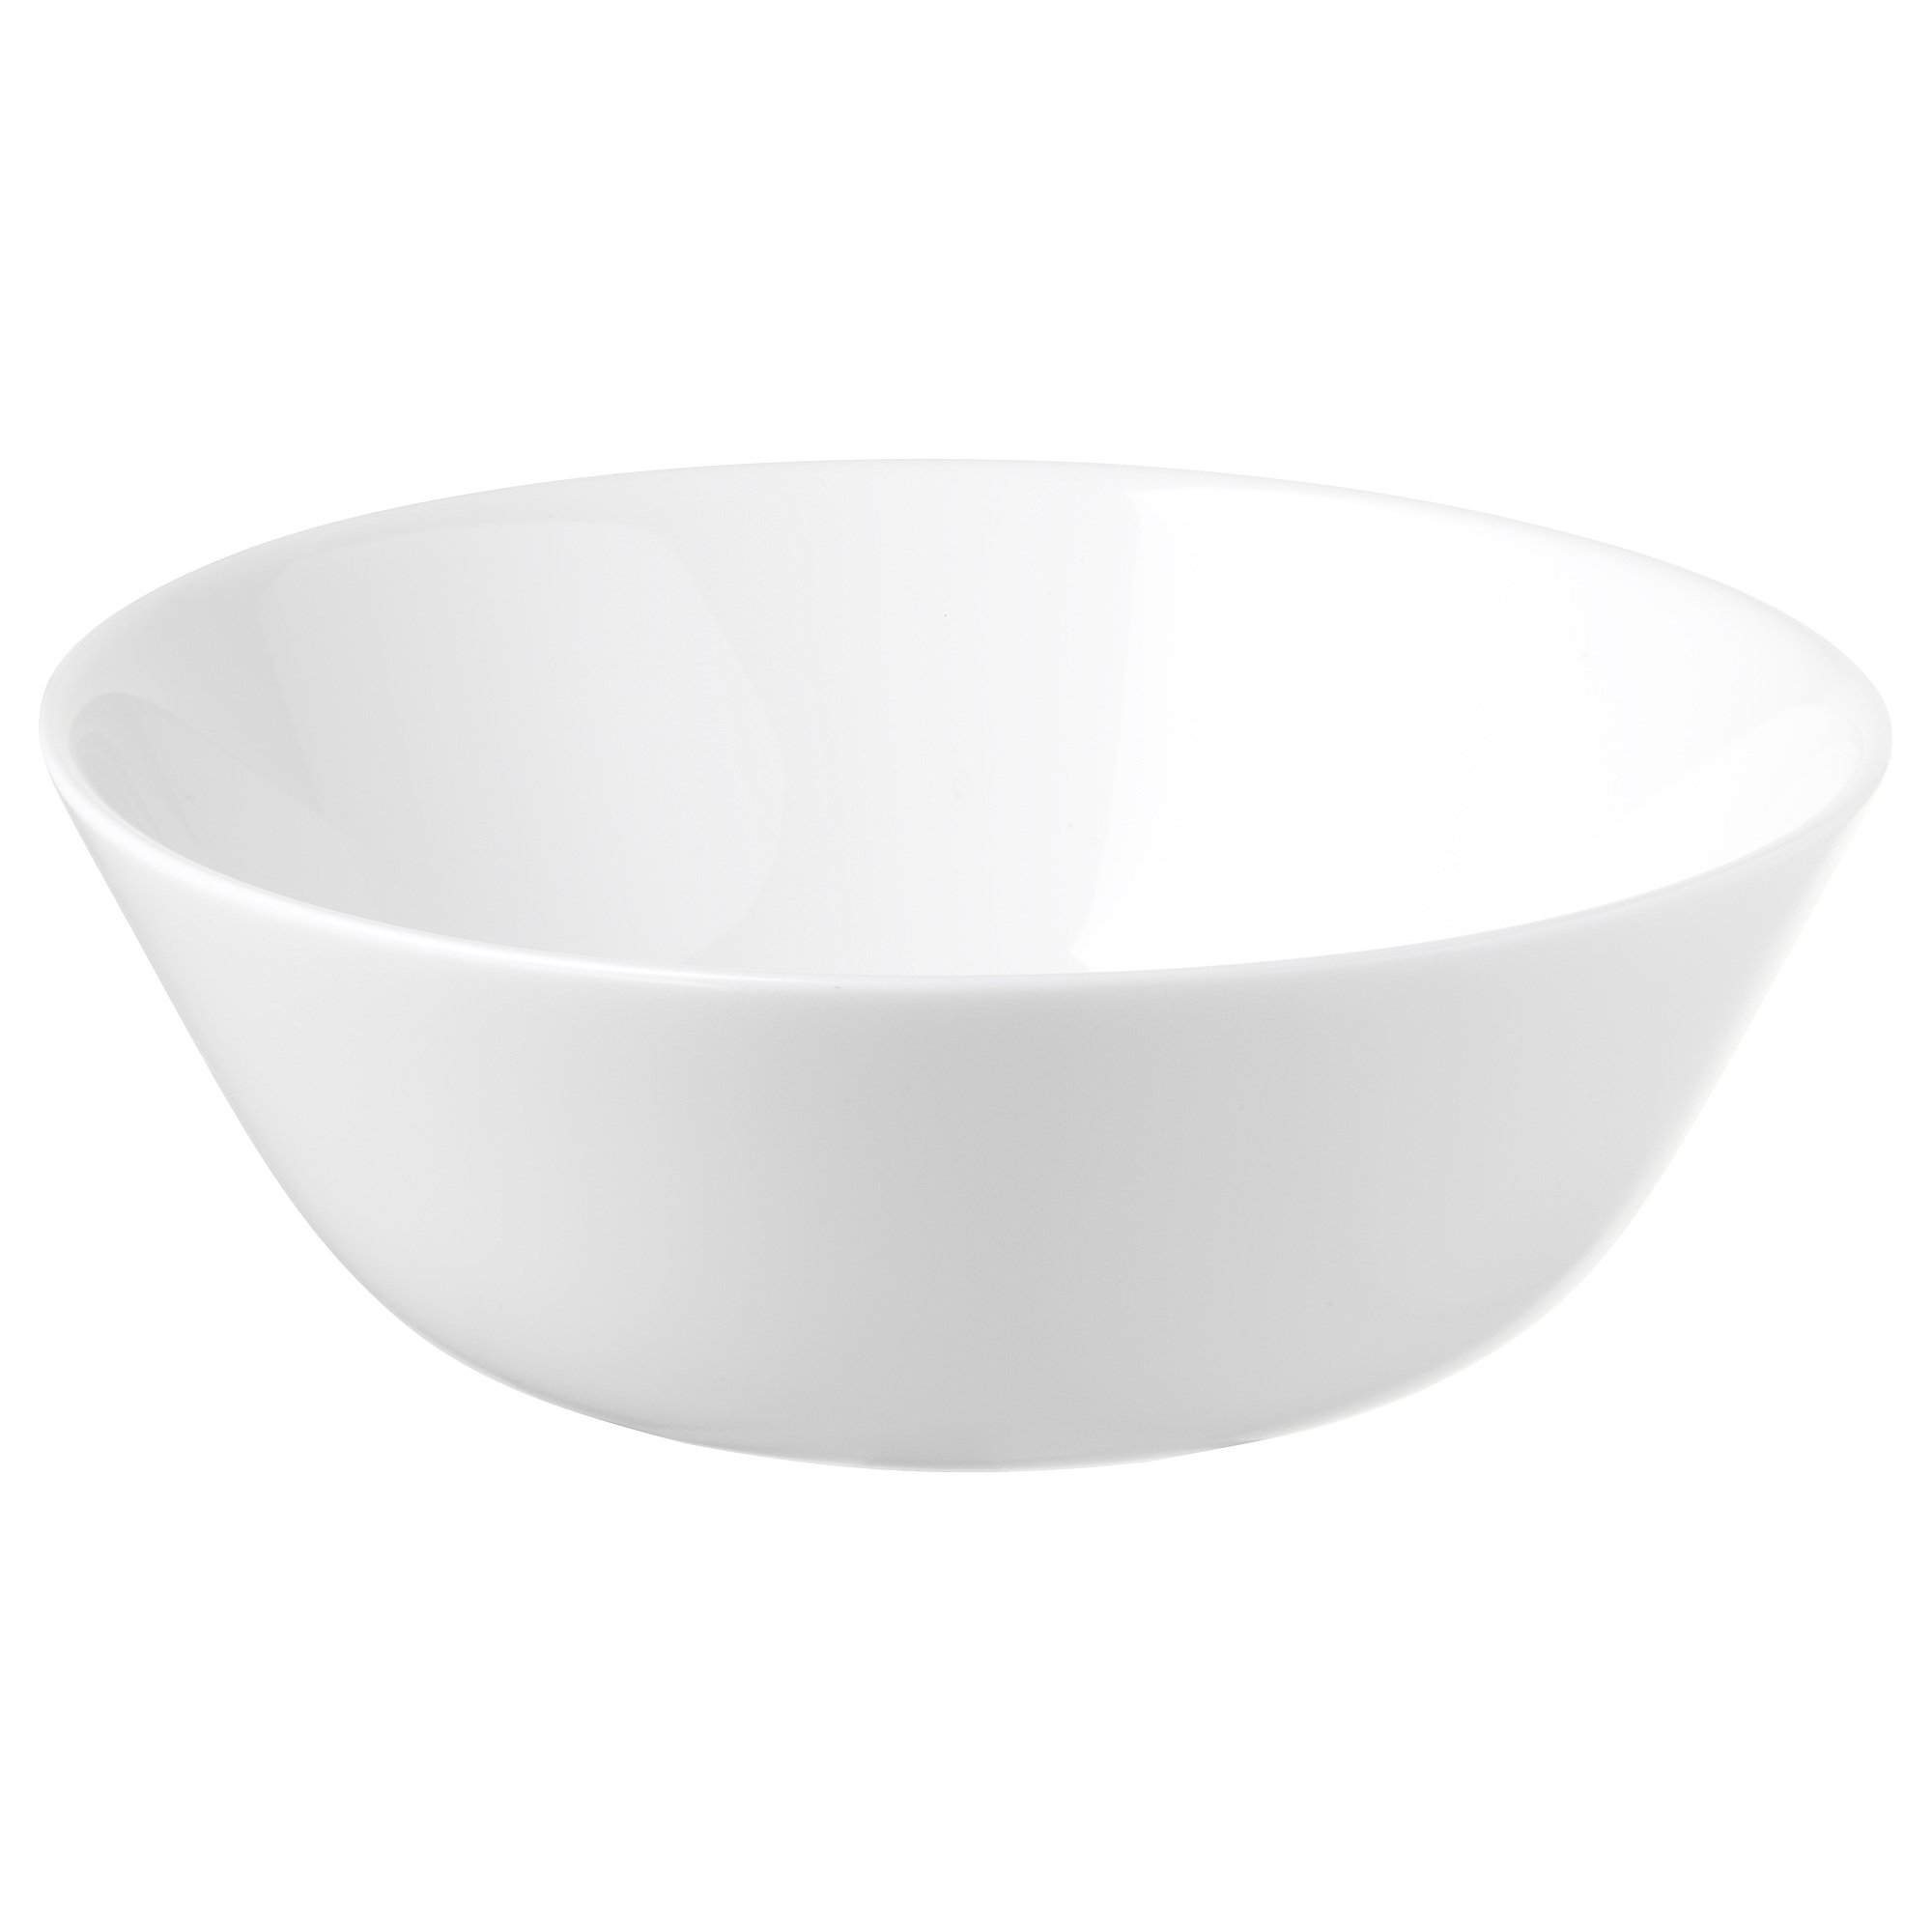 OFTAST bowl